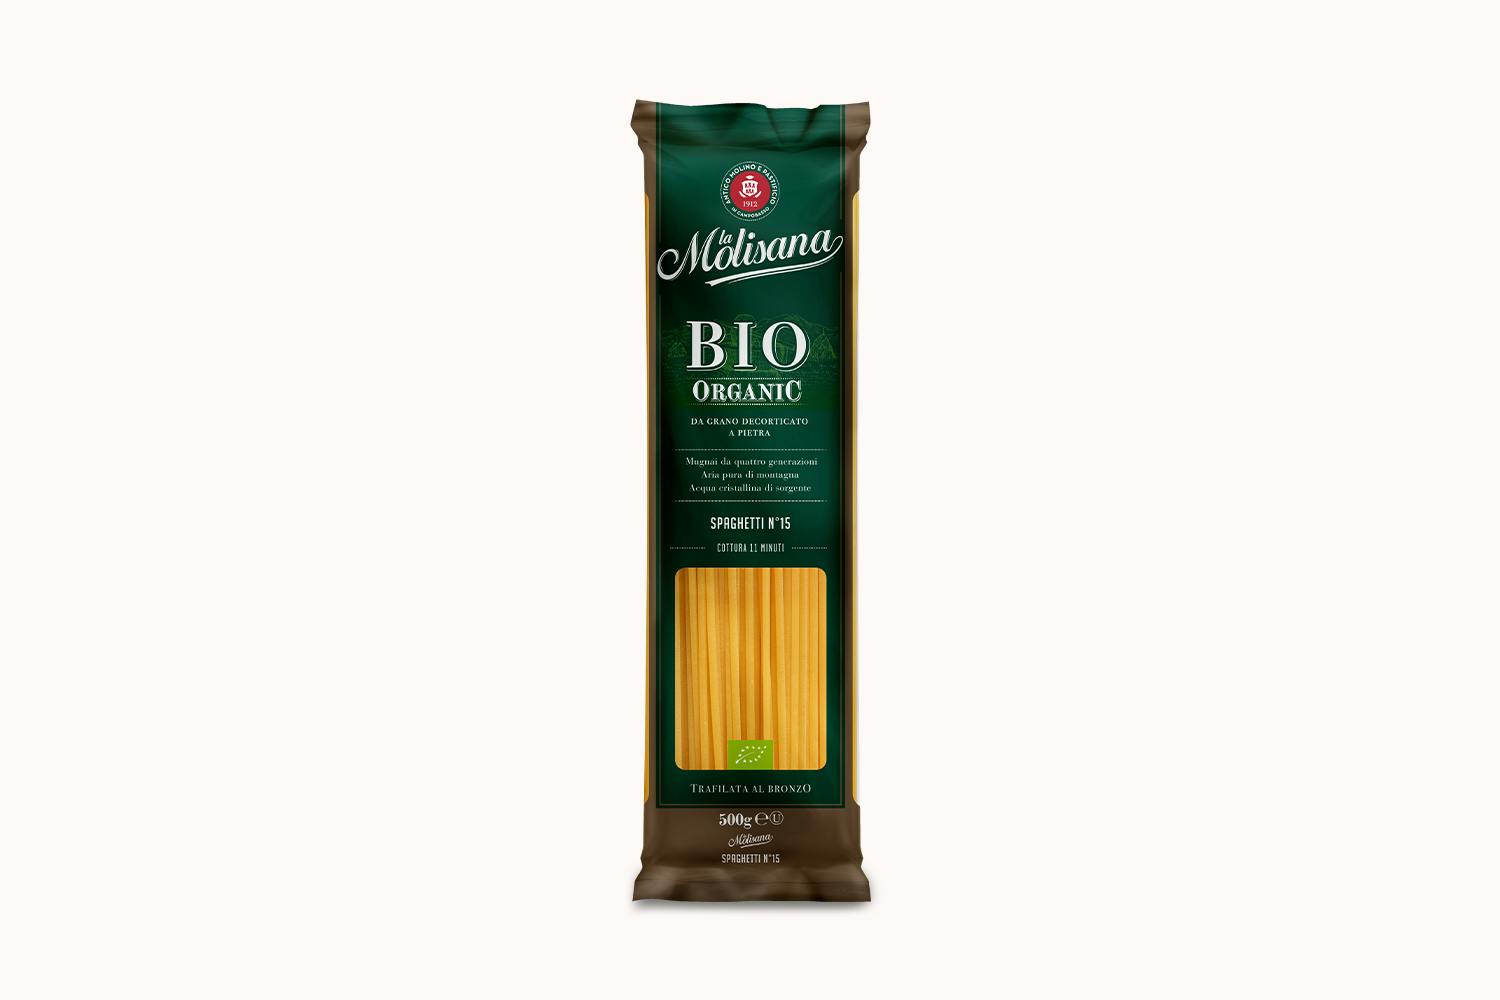 La Molisana Spaghetti Bio Organic Pasta